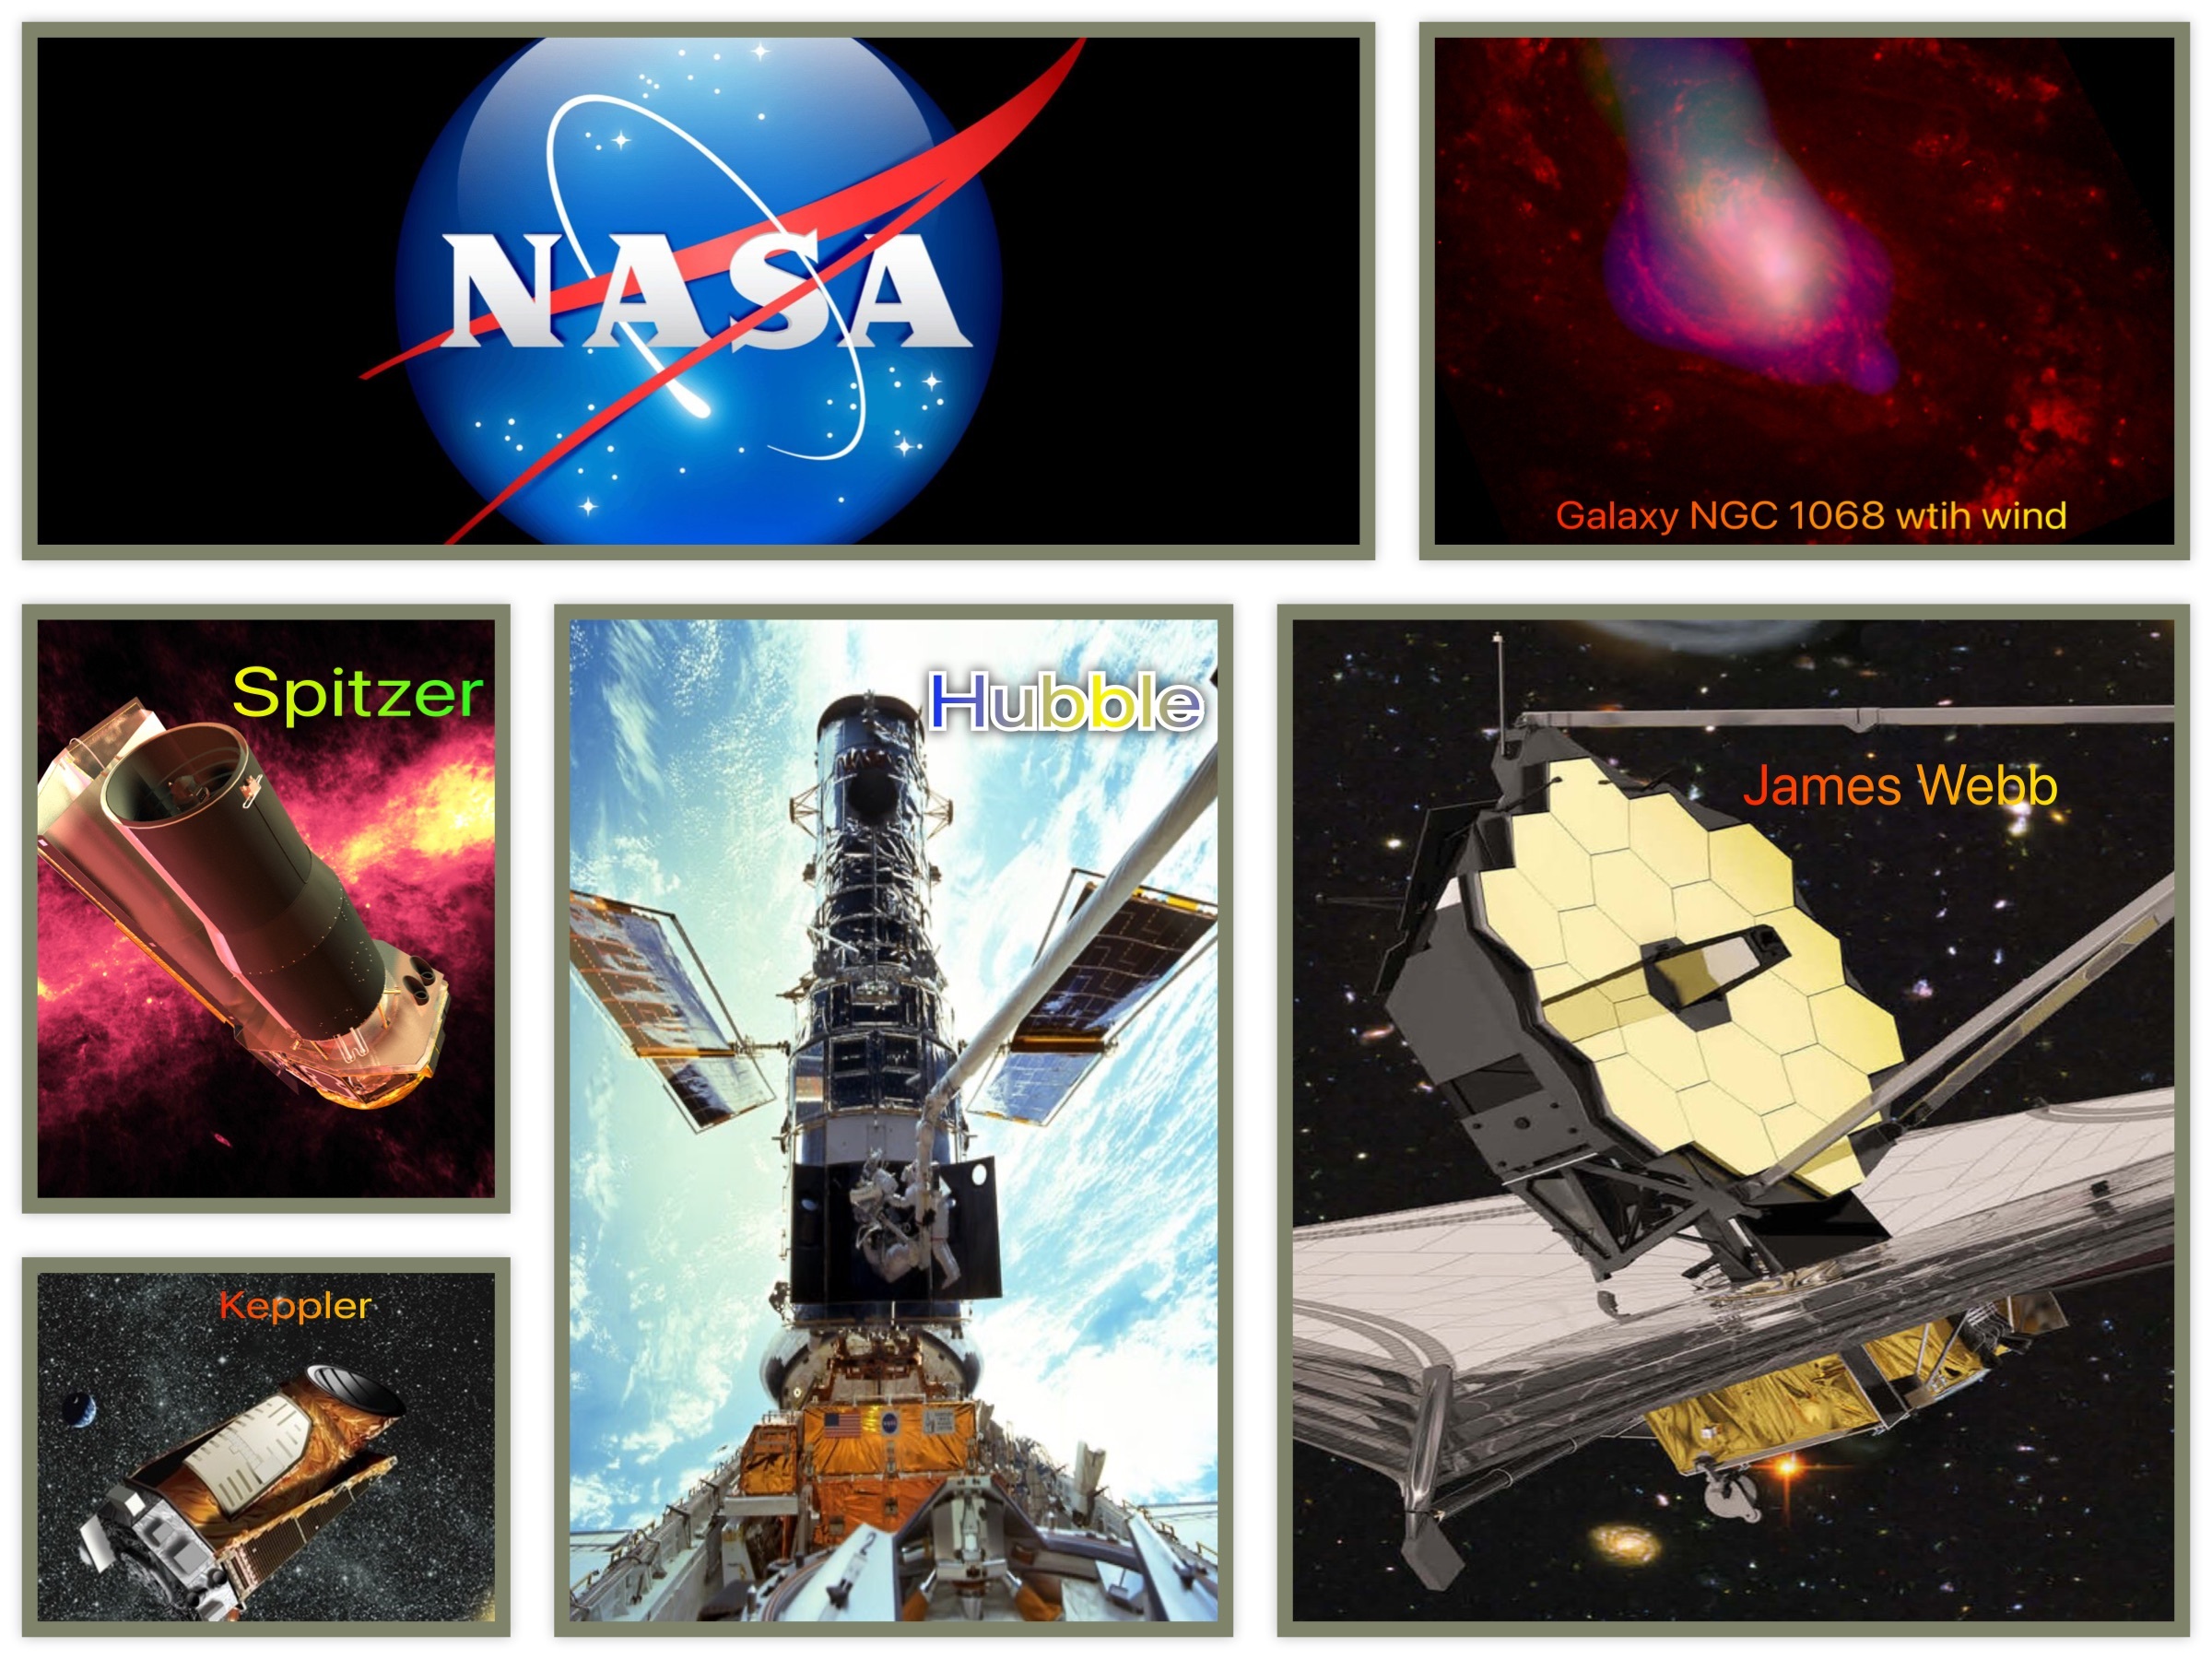 NASA_Feb_28_Collage7ngvu.jpg